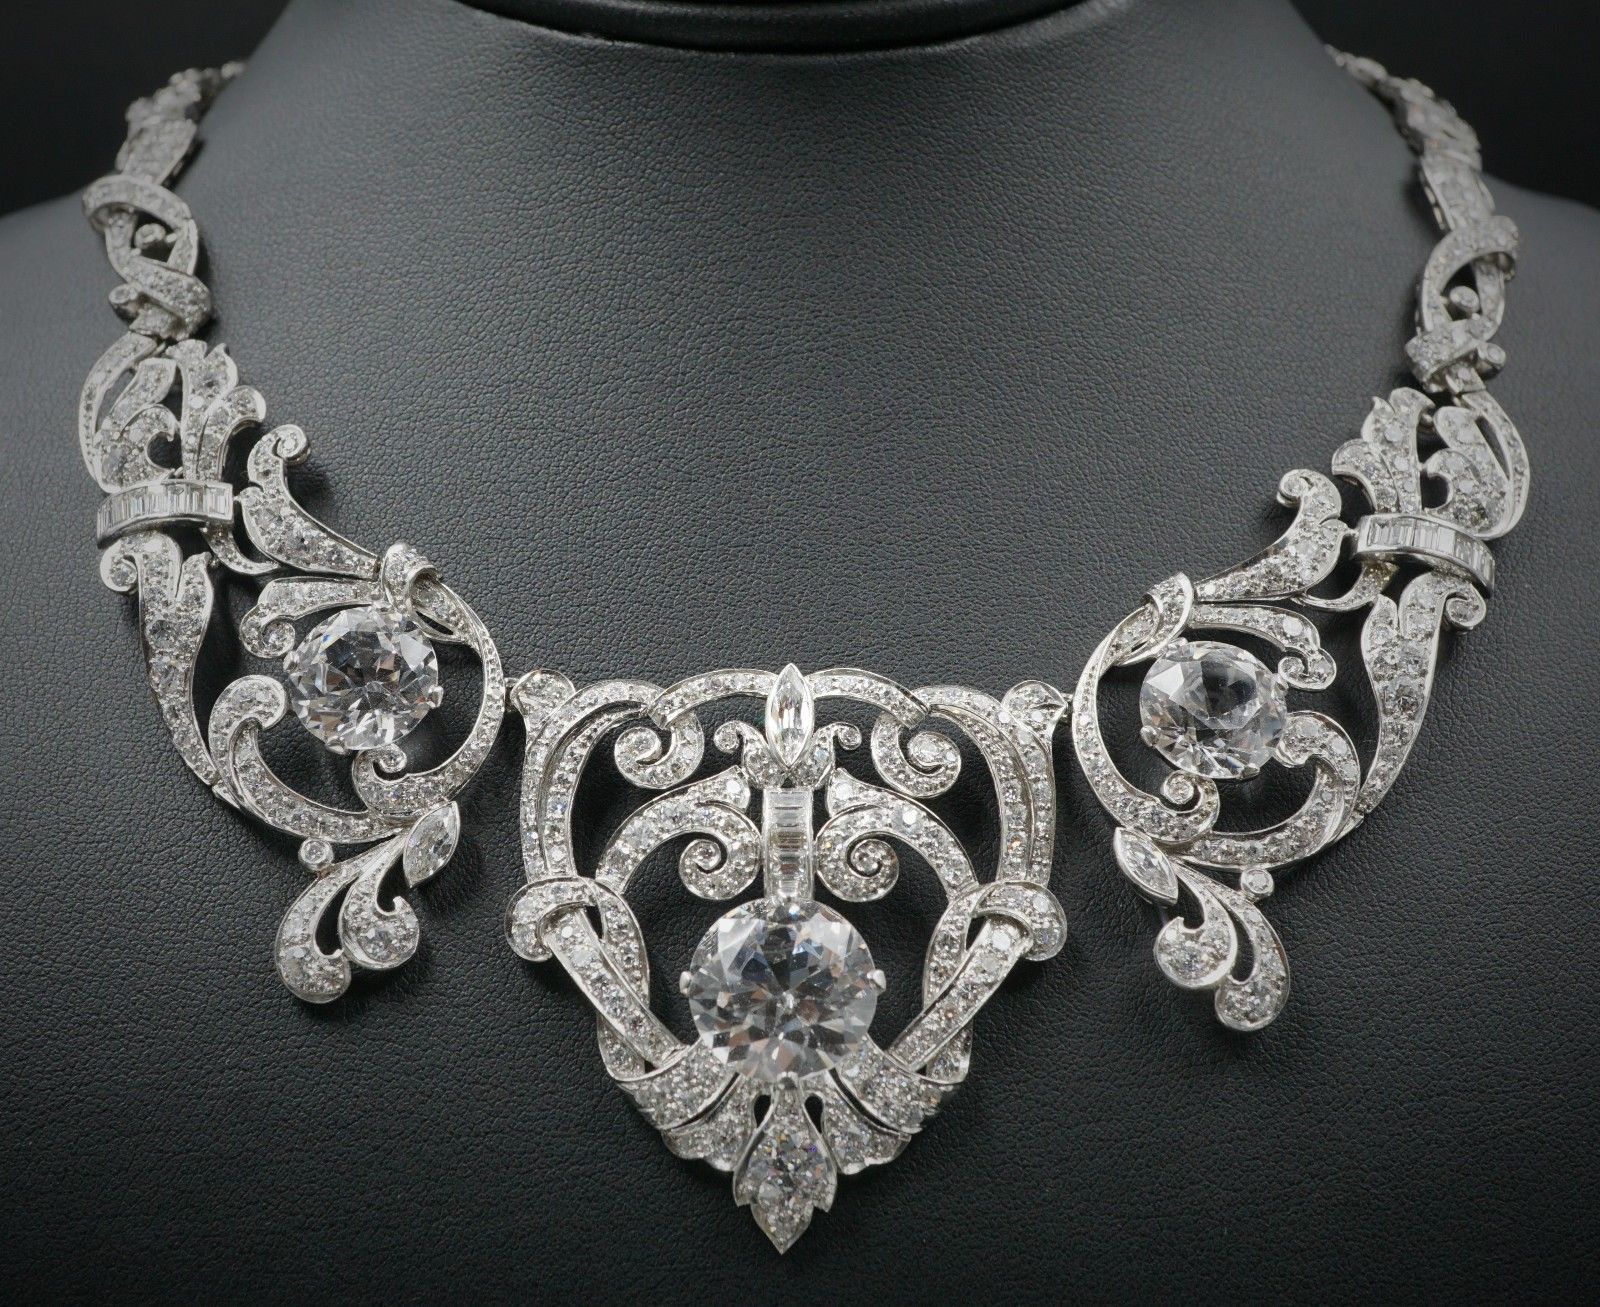 Necklace: ladies platinum Edwardian era Art Deco design open filigree natural diamond and imitation diamond link necklace, fastening with a fold-over locking clasp | 568 diamonds | 12.9 carats | Appraisal: $188,500